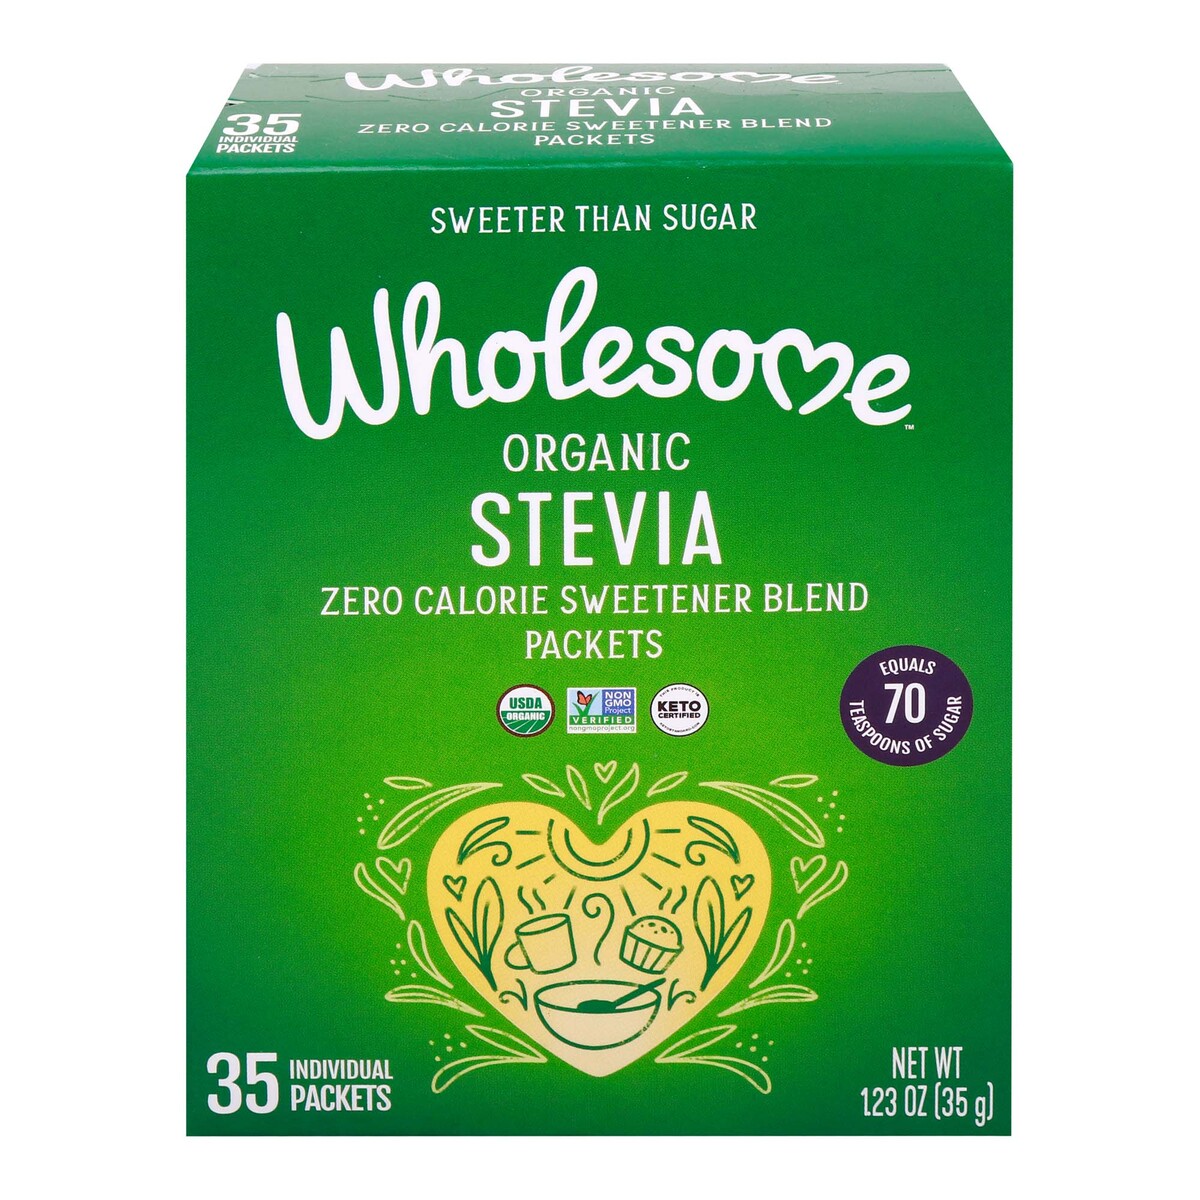 Wholesome Organic Stevia Zero Calorie Sweetener Blend 35g